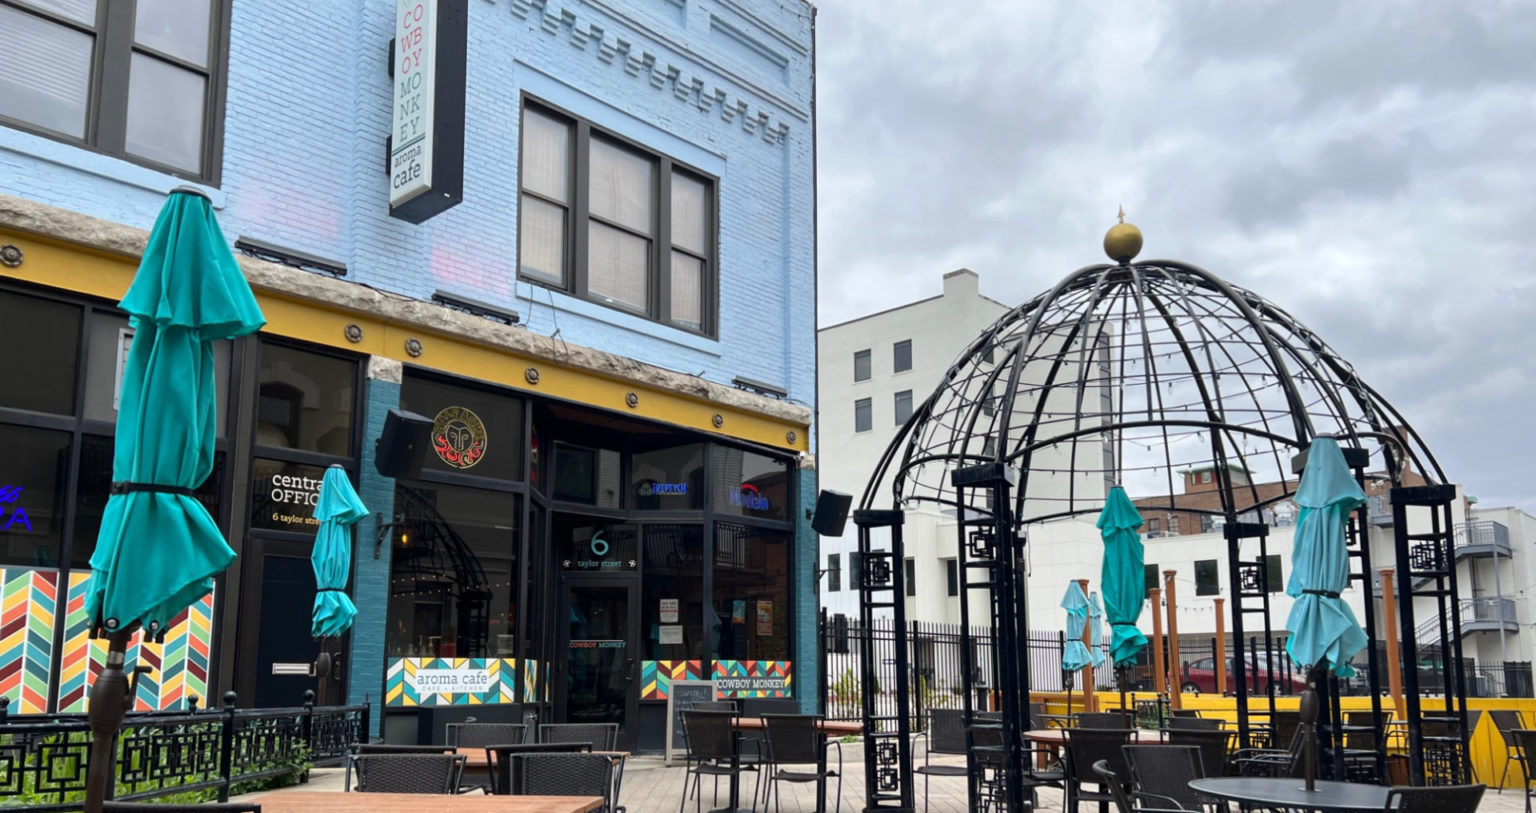 Cowboy Monkey restaurant and bar closing for renovations